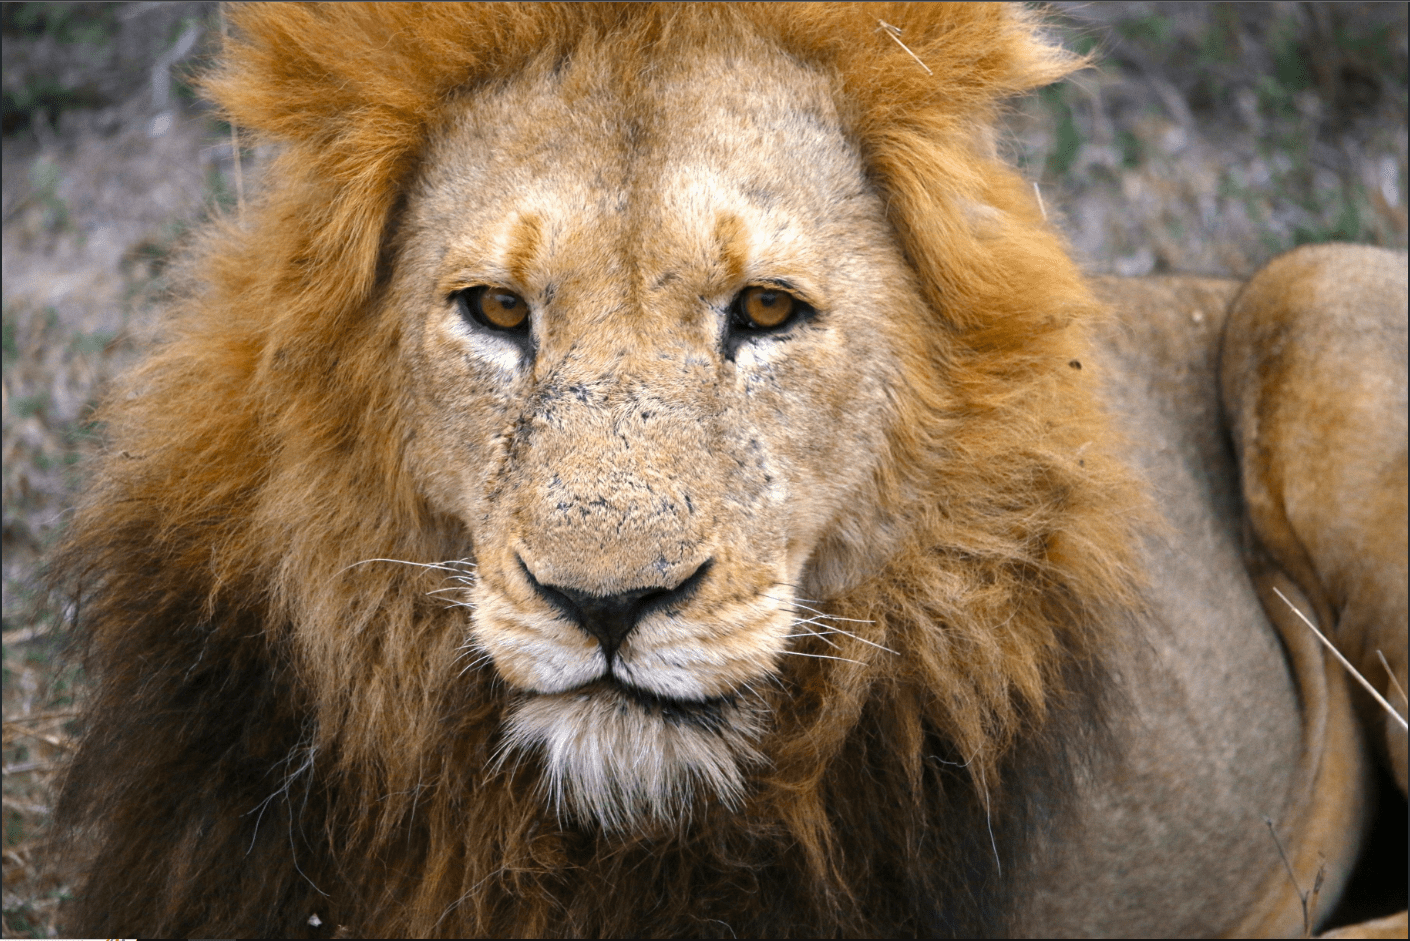 Close up shot of a lion watching at the camera